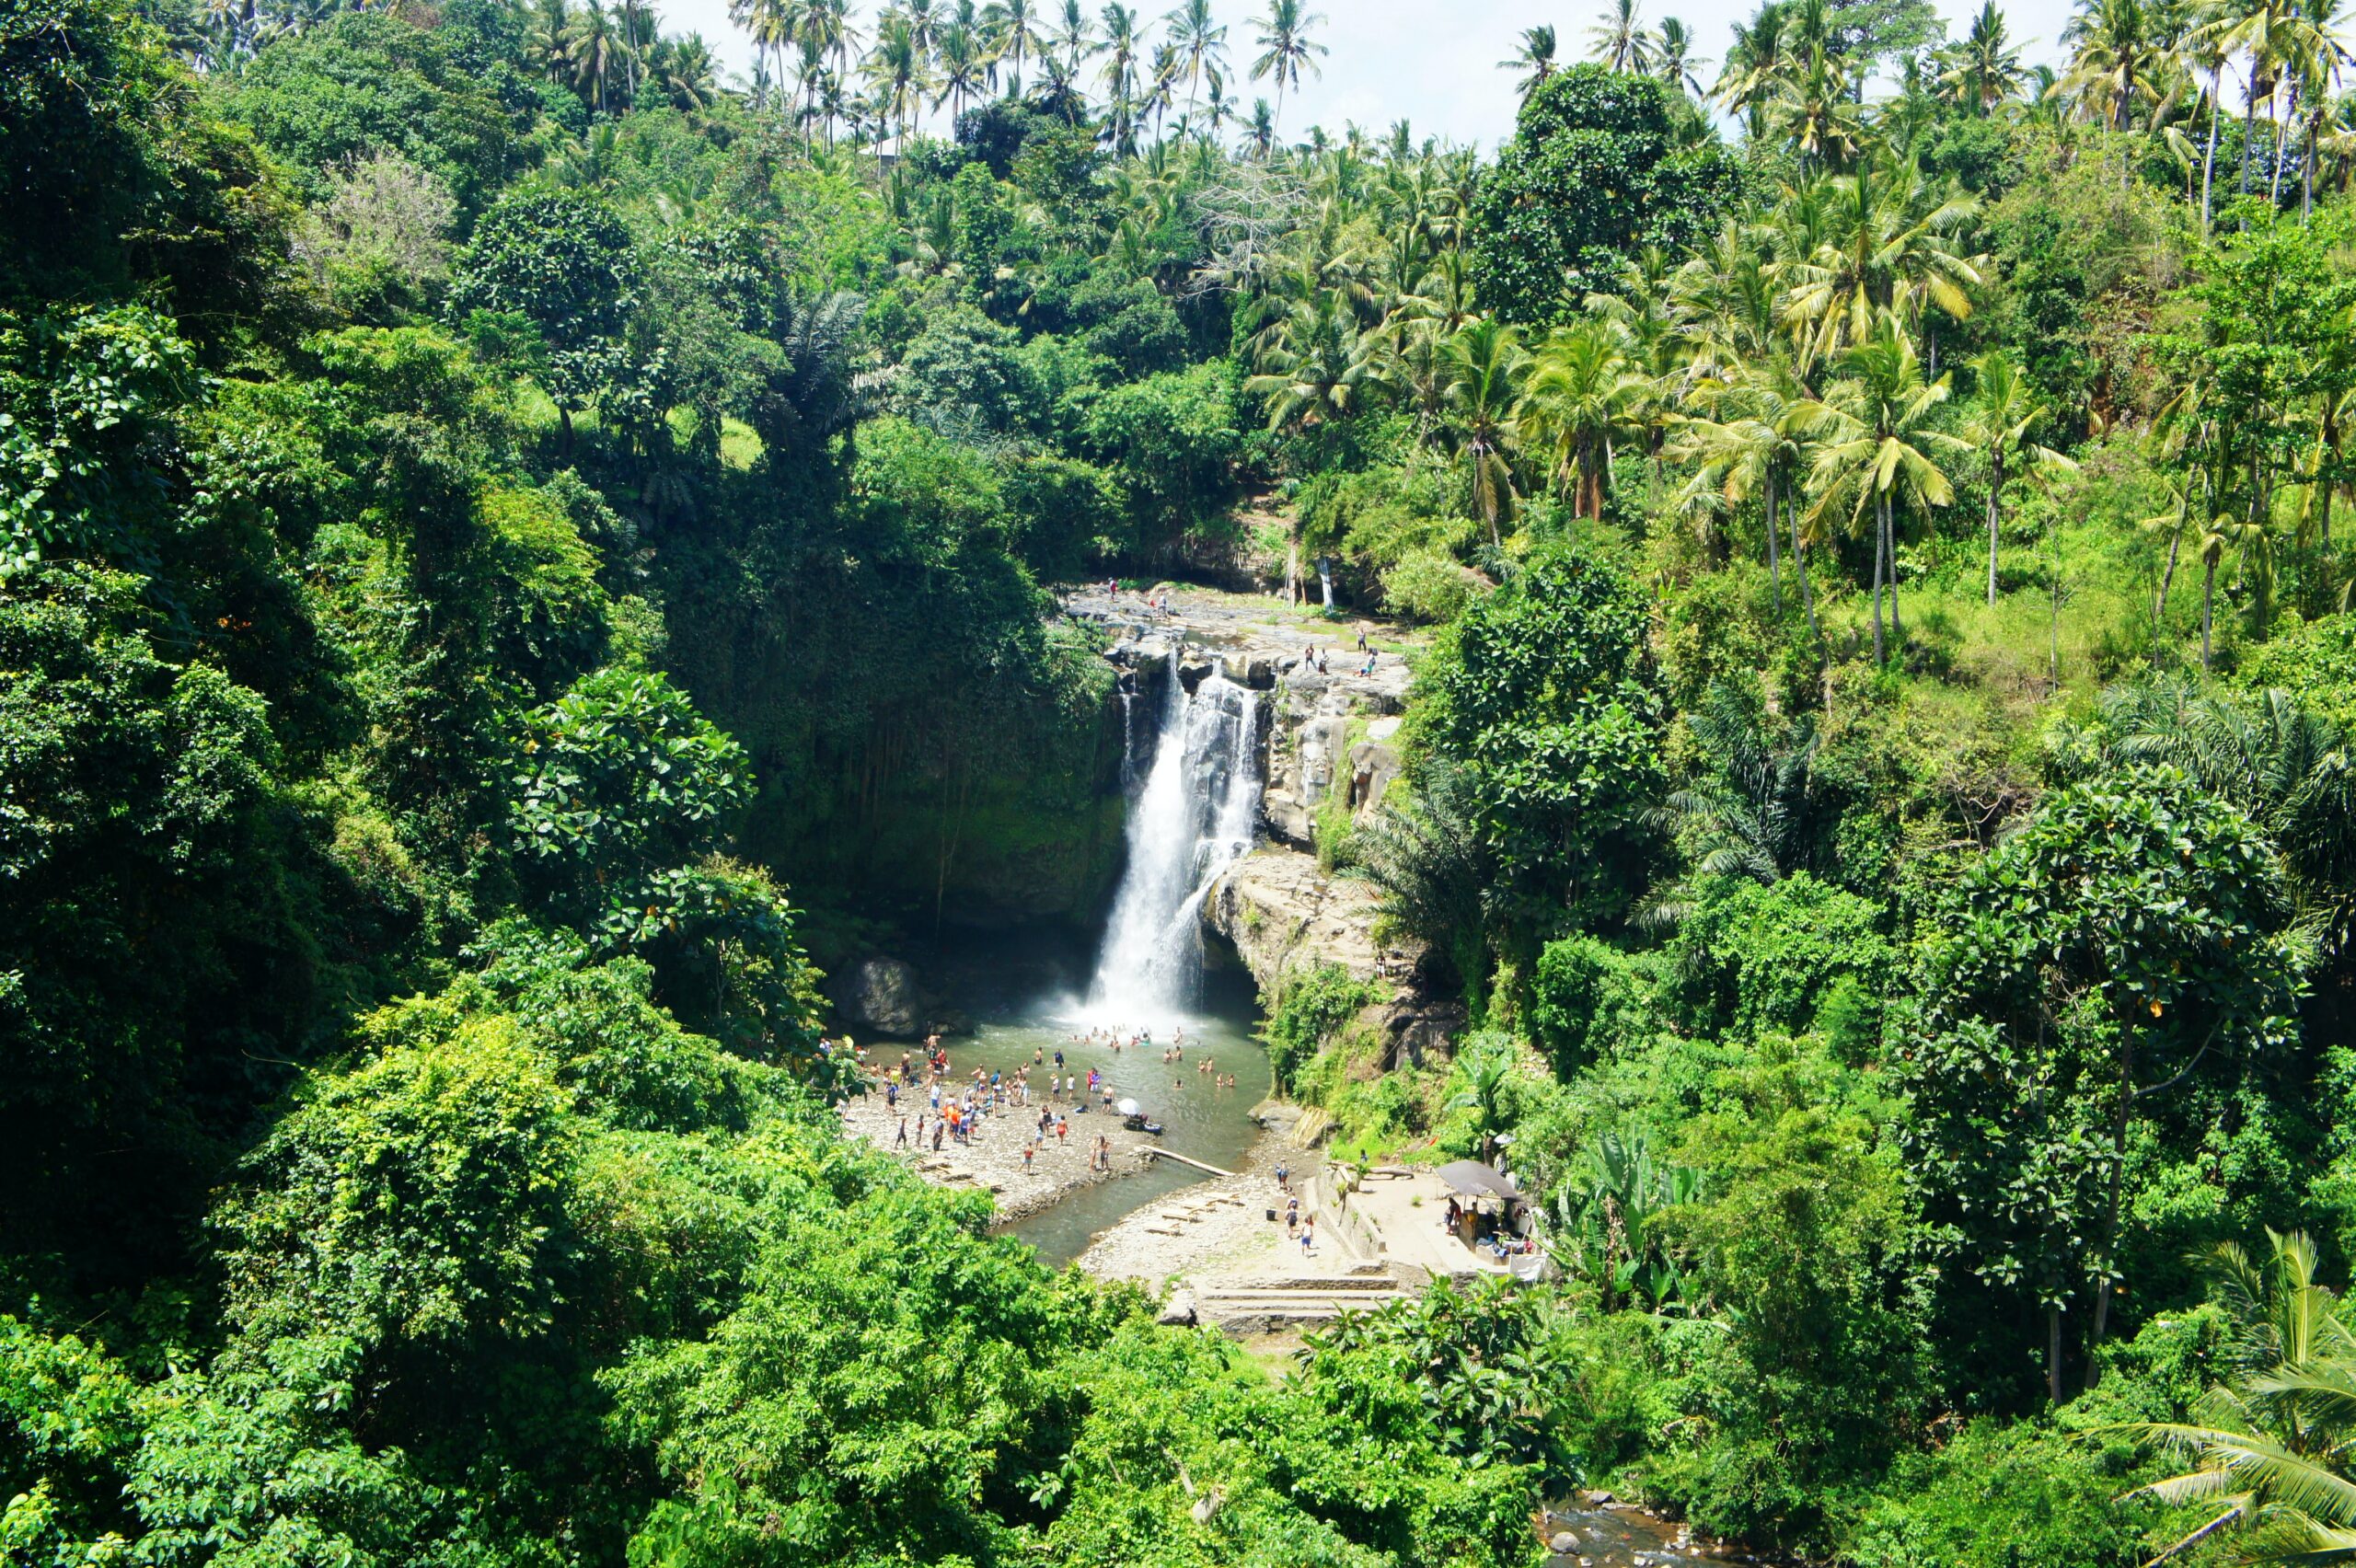 Vista da cachoeira em meio a selva em Wisata Air Terjun Tegenungan, Bali, Indonésia.